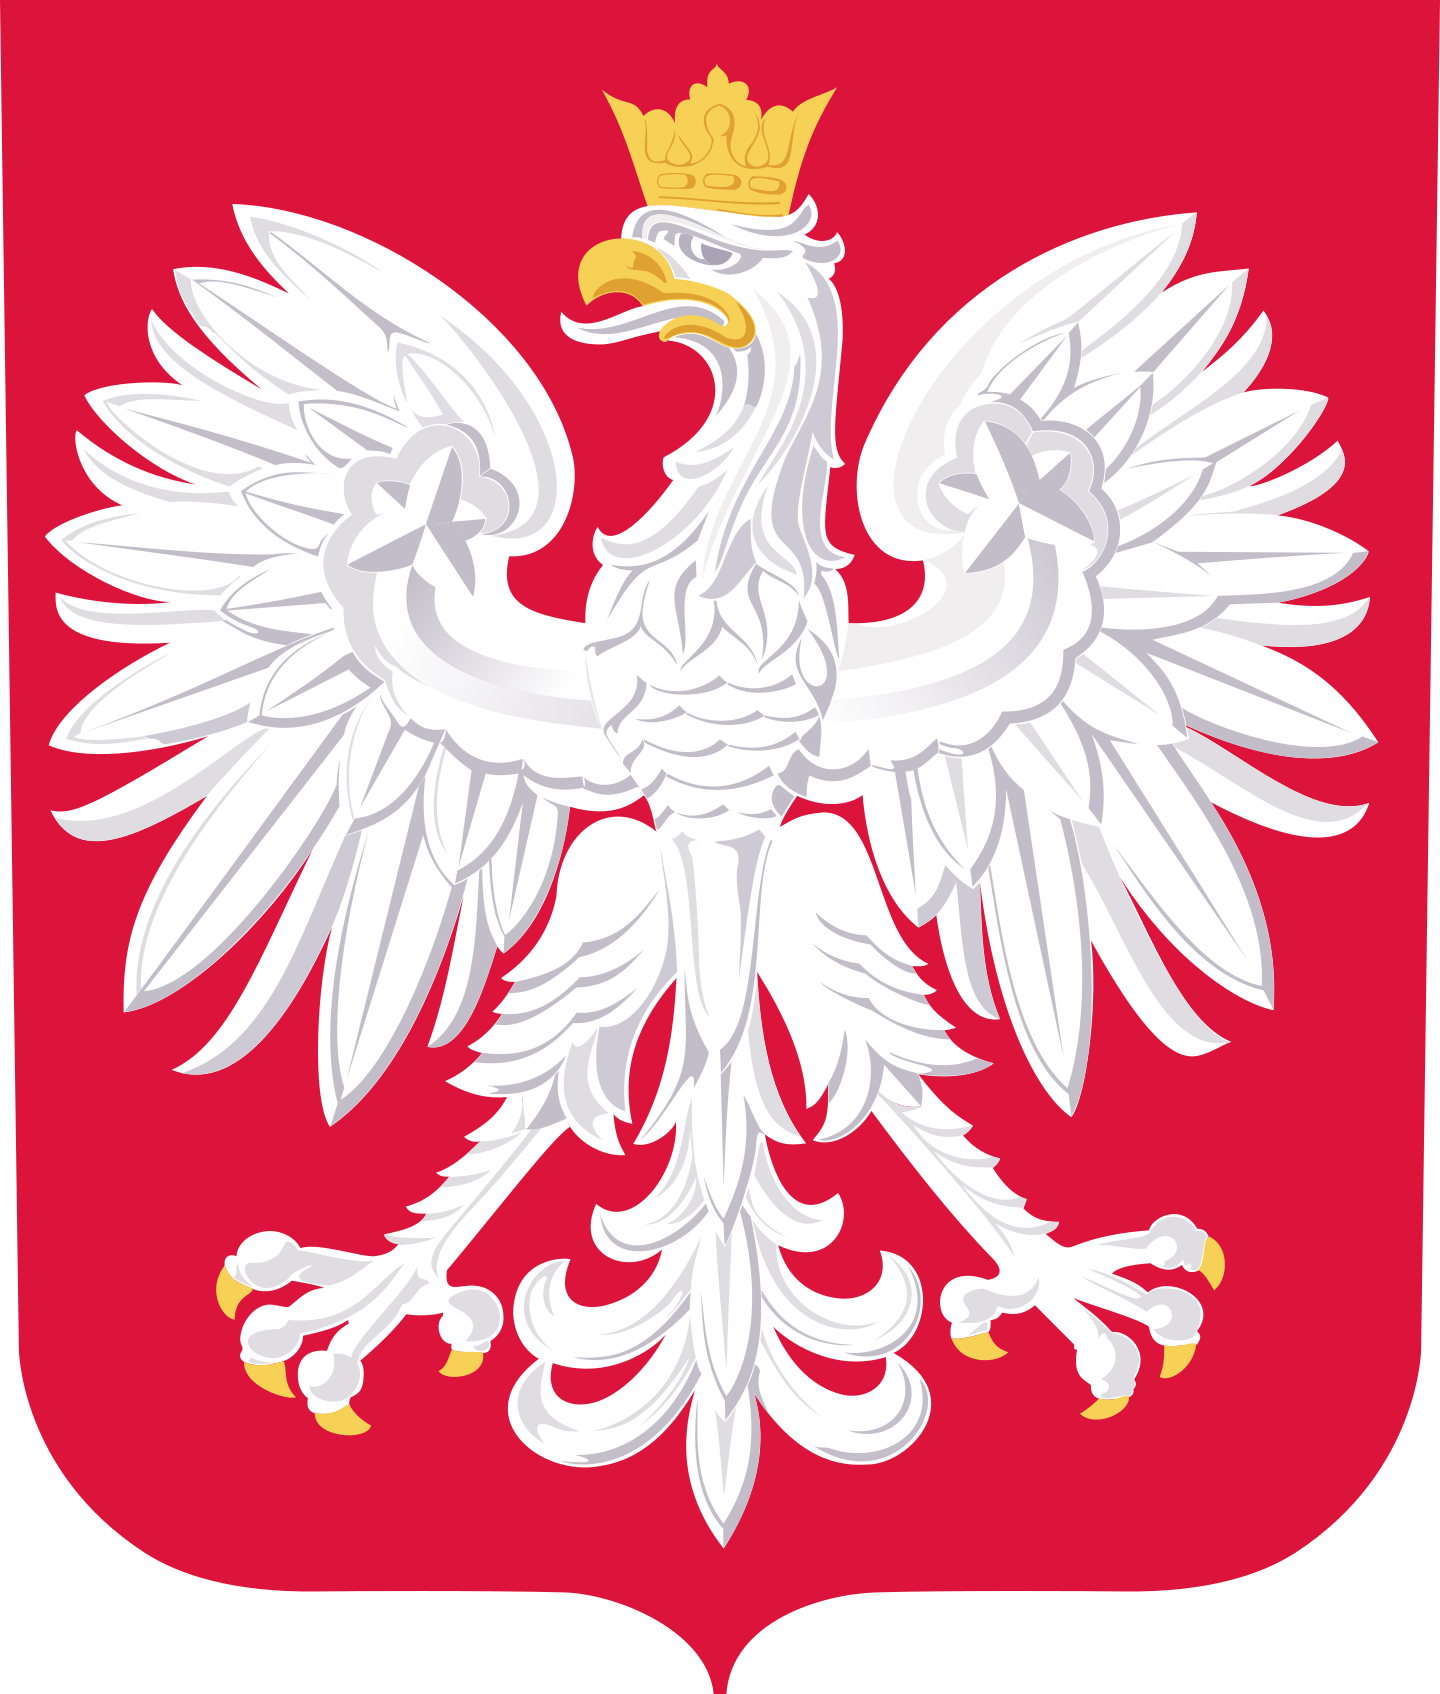 poland national football team logo 2 - Équipe de Pologne de Football Logo